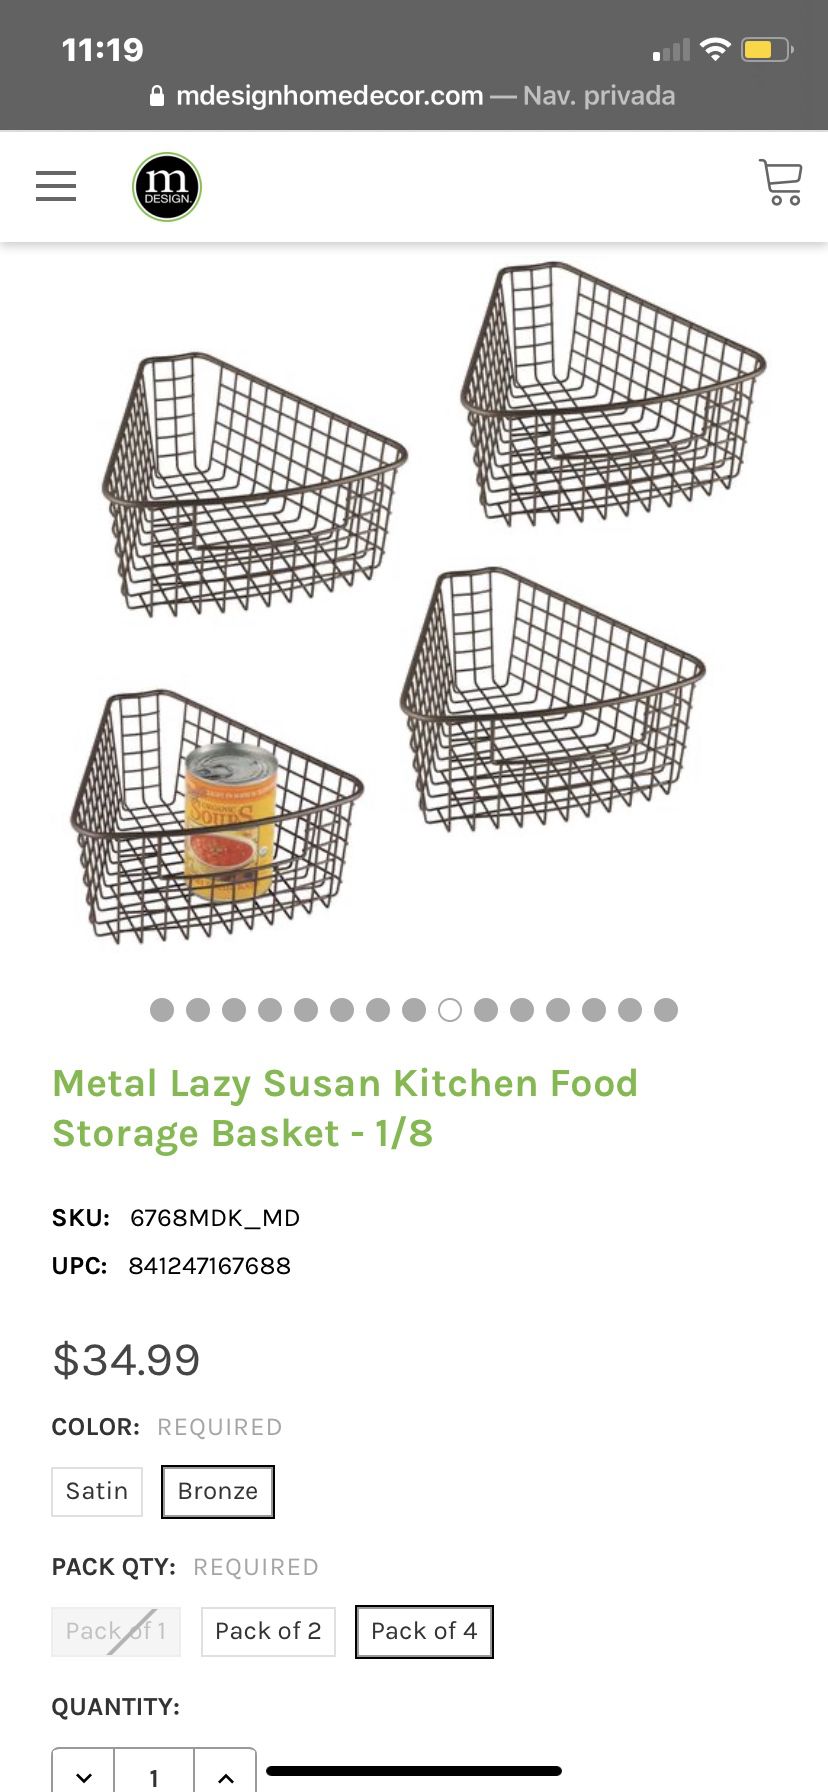 M DESIGN Metal Lazy Susan Kitchen Food Storage Basket BRONZE